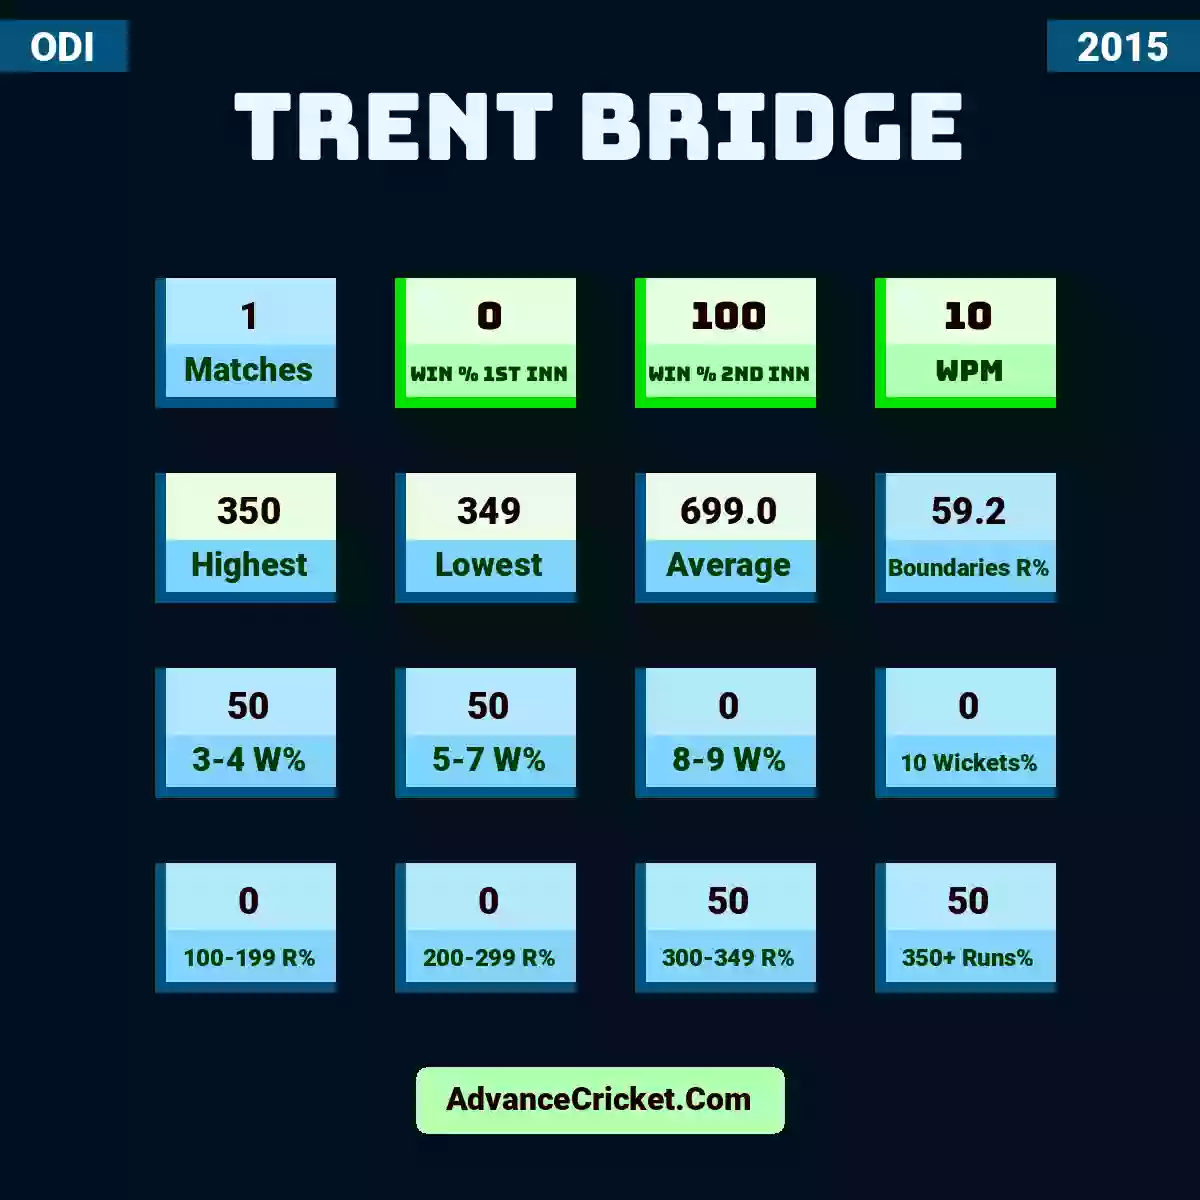 Image showing Trent Bridge with Matches: 1, Win % 1st Inn: 0, Win % 2nd Inn: 100, WPM: 10, Highest: 350, Lowest: 349, Average: 699.0, Boundaries R%: 59.2, 3-4 W%: 50, 5-7 W%: 50, 8-9 W%: 0, 10 Wickets%: 0, 100-199 R%: 0, 200-299 R%: 0, 300-349 R%: 50, 350+ Runs%: 50.